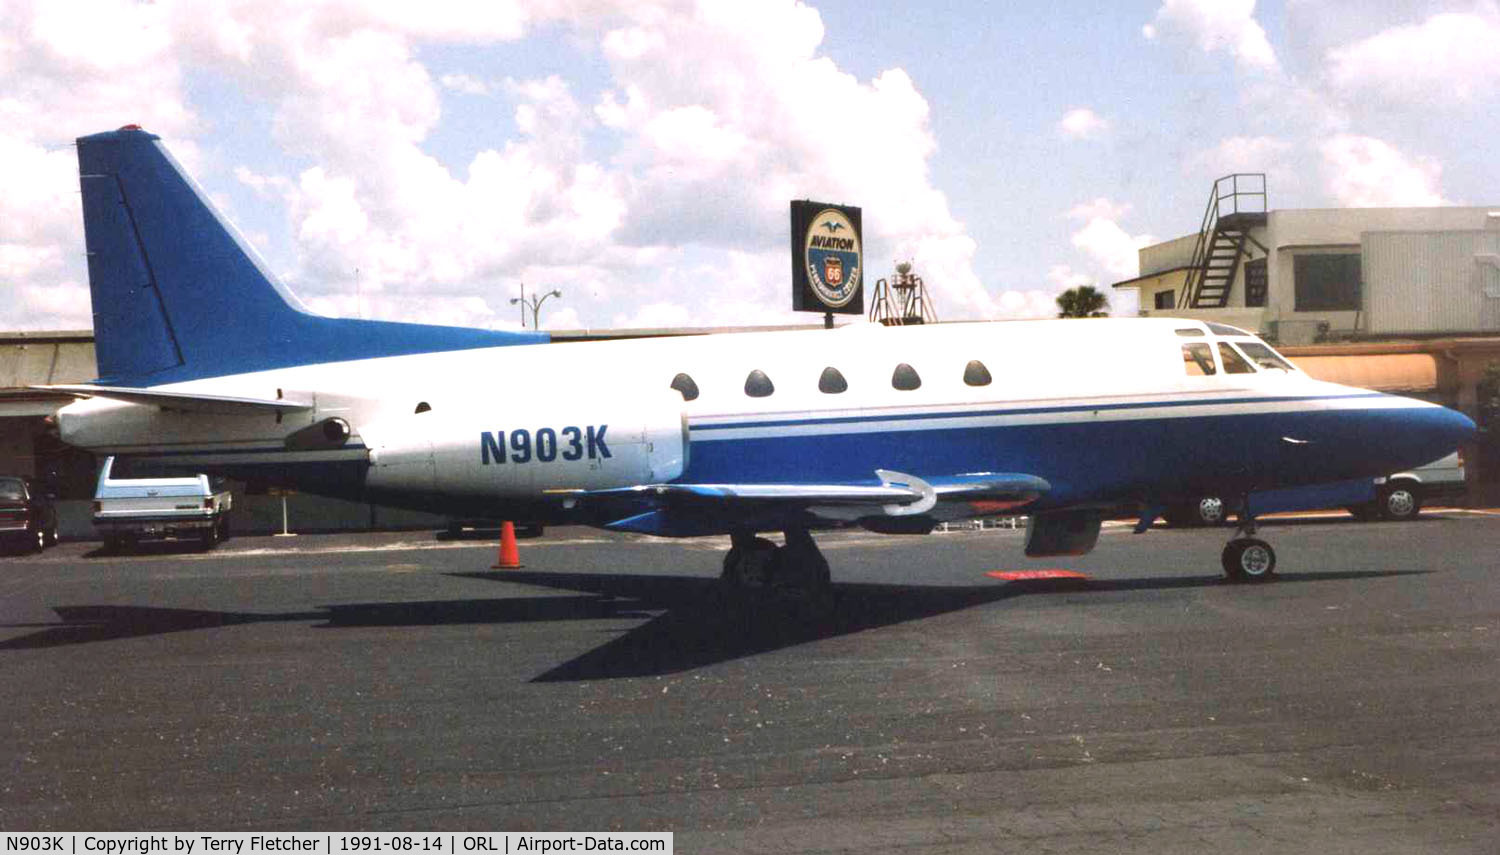 N903K, 1981 Rockwell International NA-265-65 Sabreliner 65 C/N 465-57, N903K was a Sabre 65 c/n 465-57 when photographed at Orlando Executive in 1991